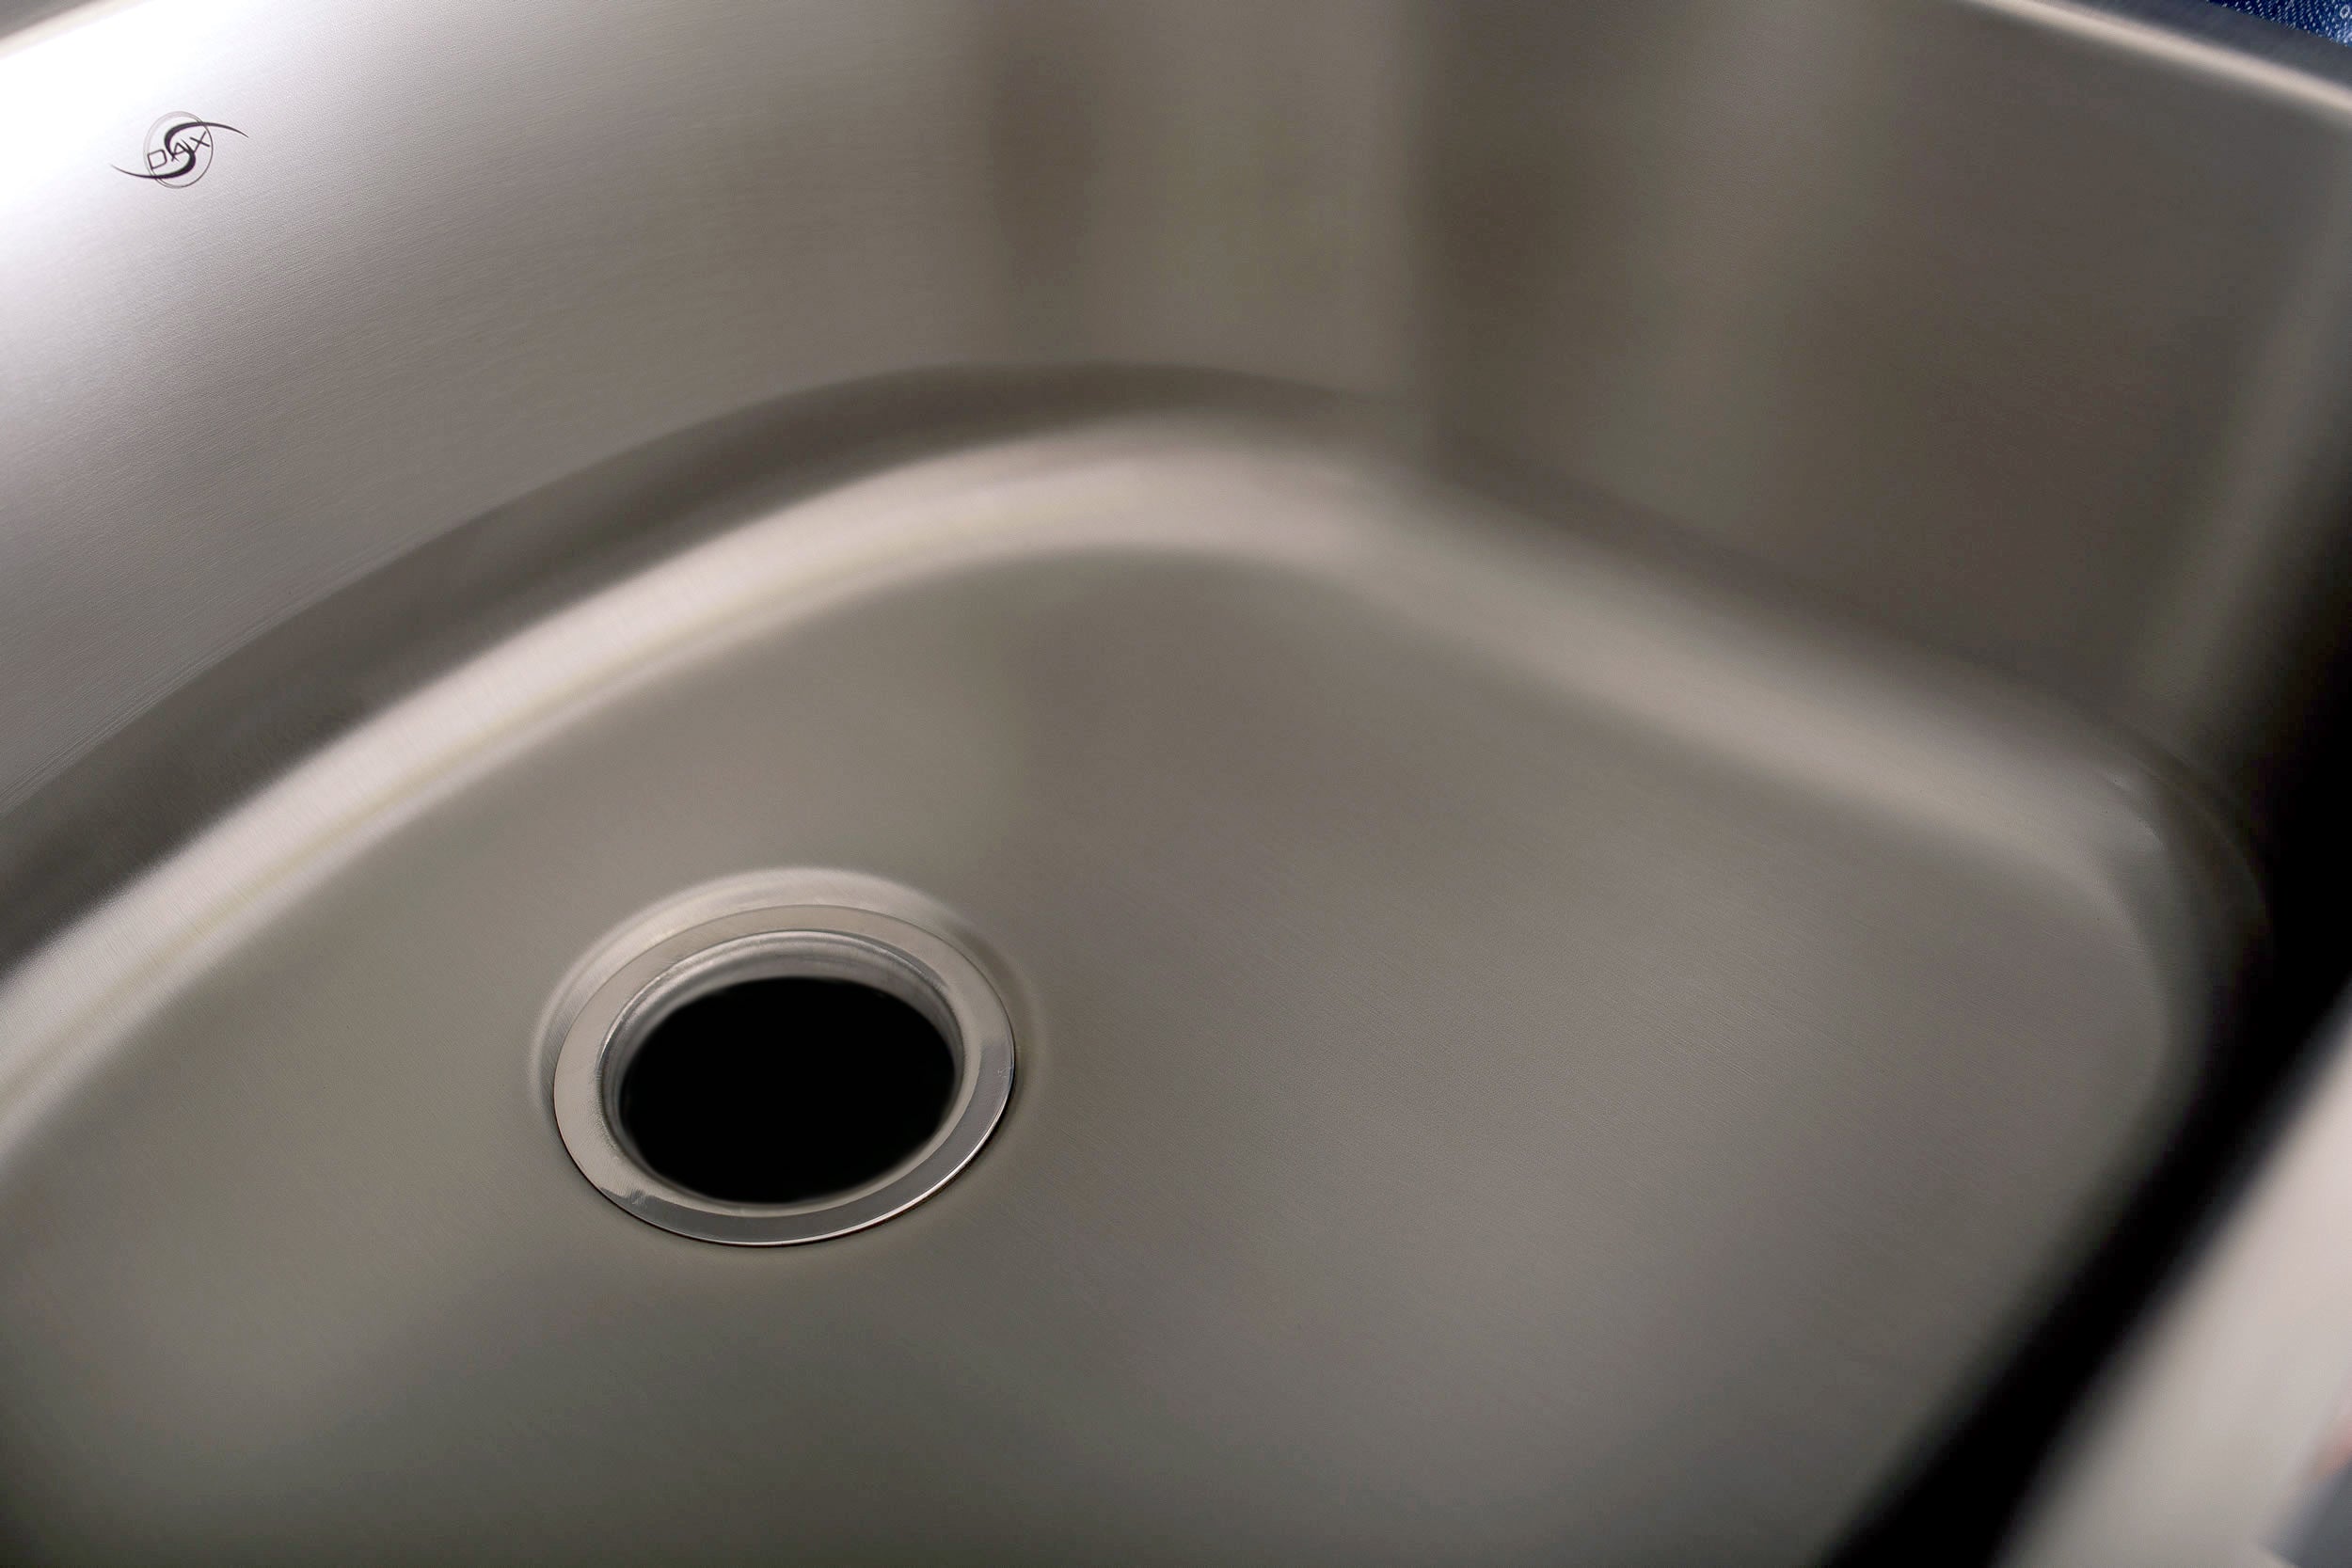 DAX Single Bowl Undermount Kitchen Sink, 18 Gauge Stainless Steel, Brushed Finish , 23-1/4 x 20-7/8 x 9 Inches (DAX-2321)